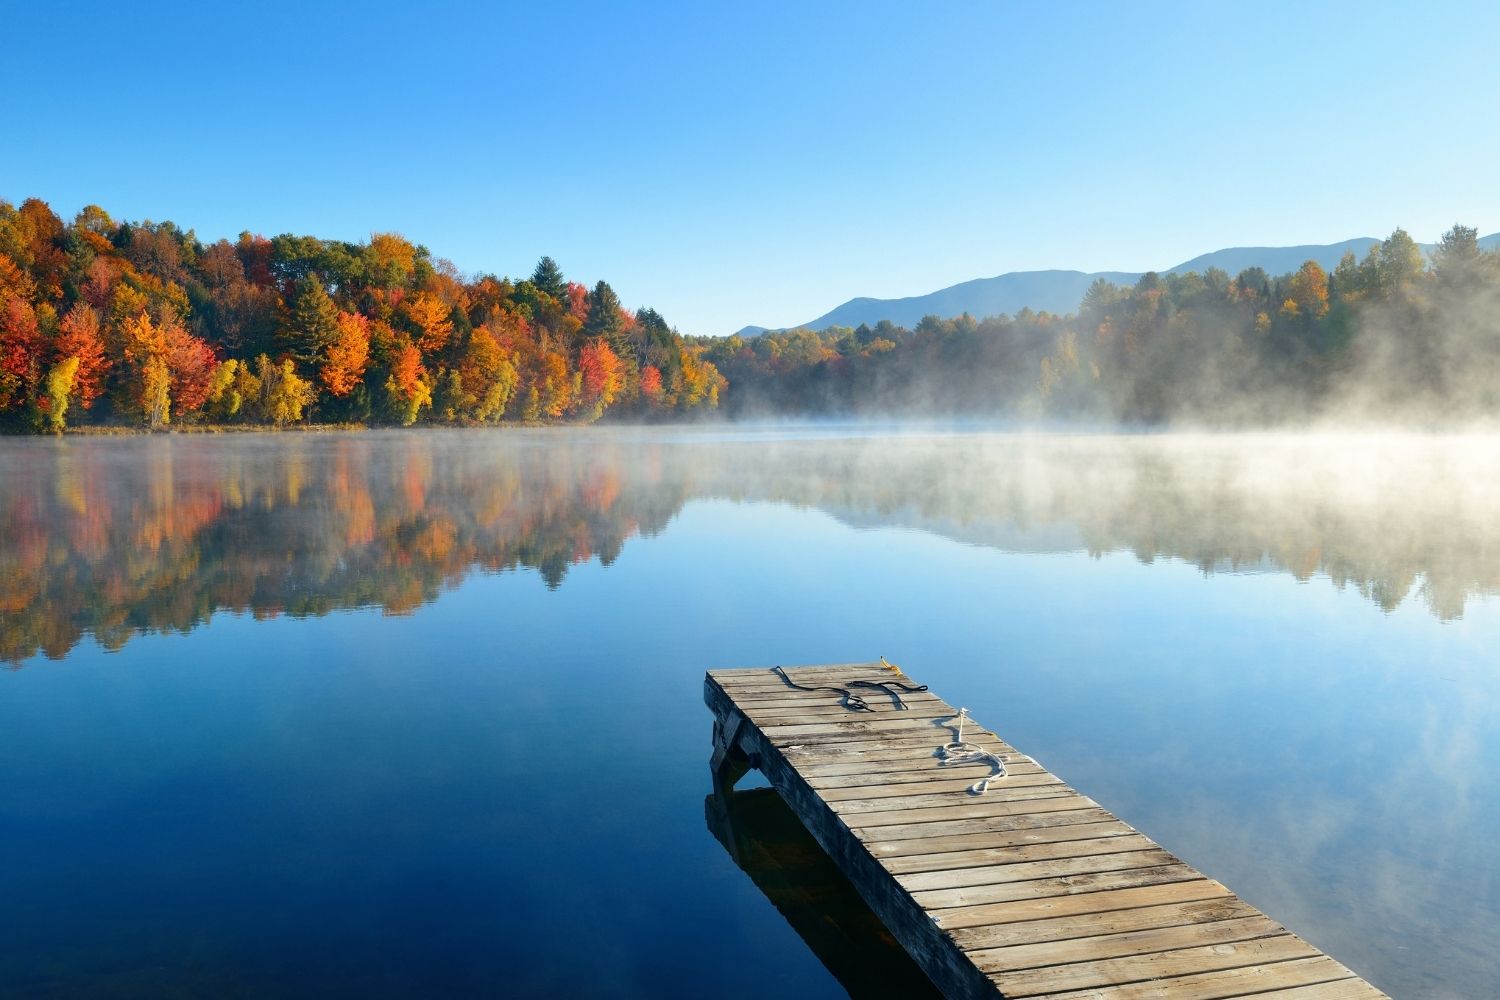 Dock on a lake with fall foliage around.